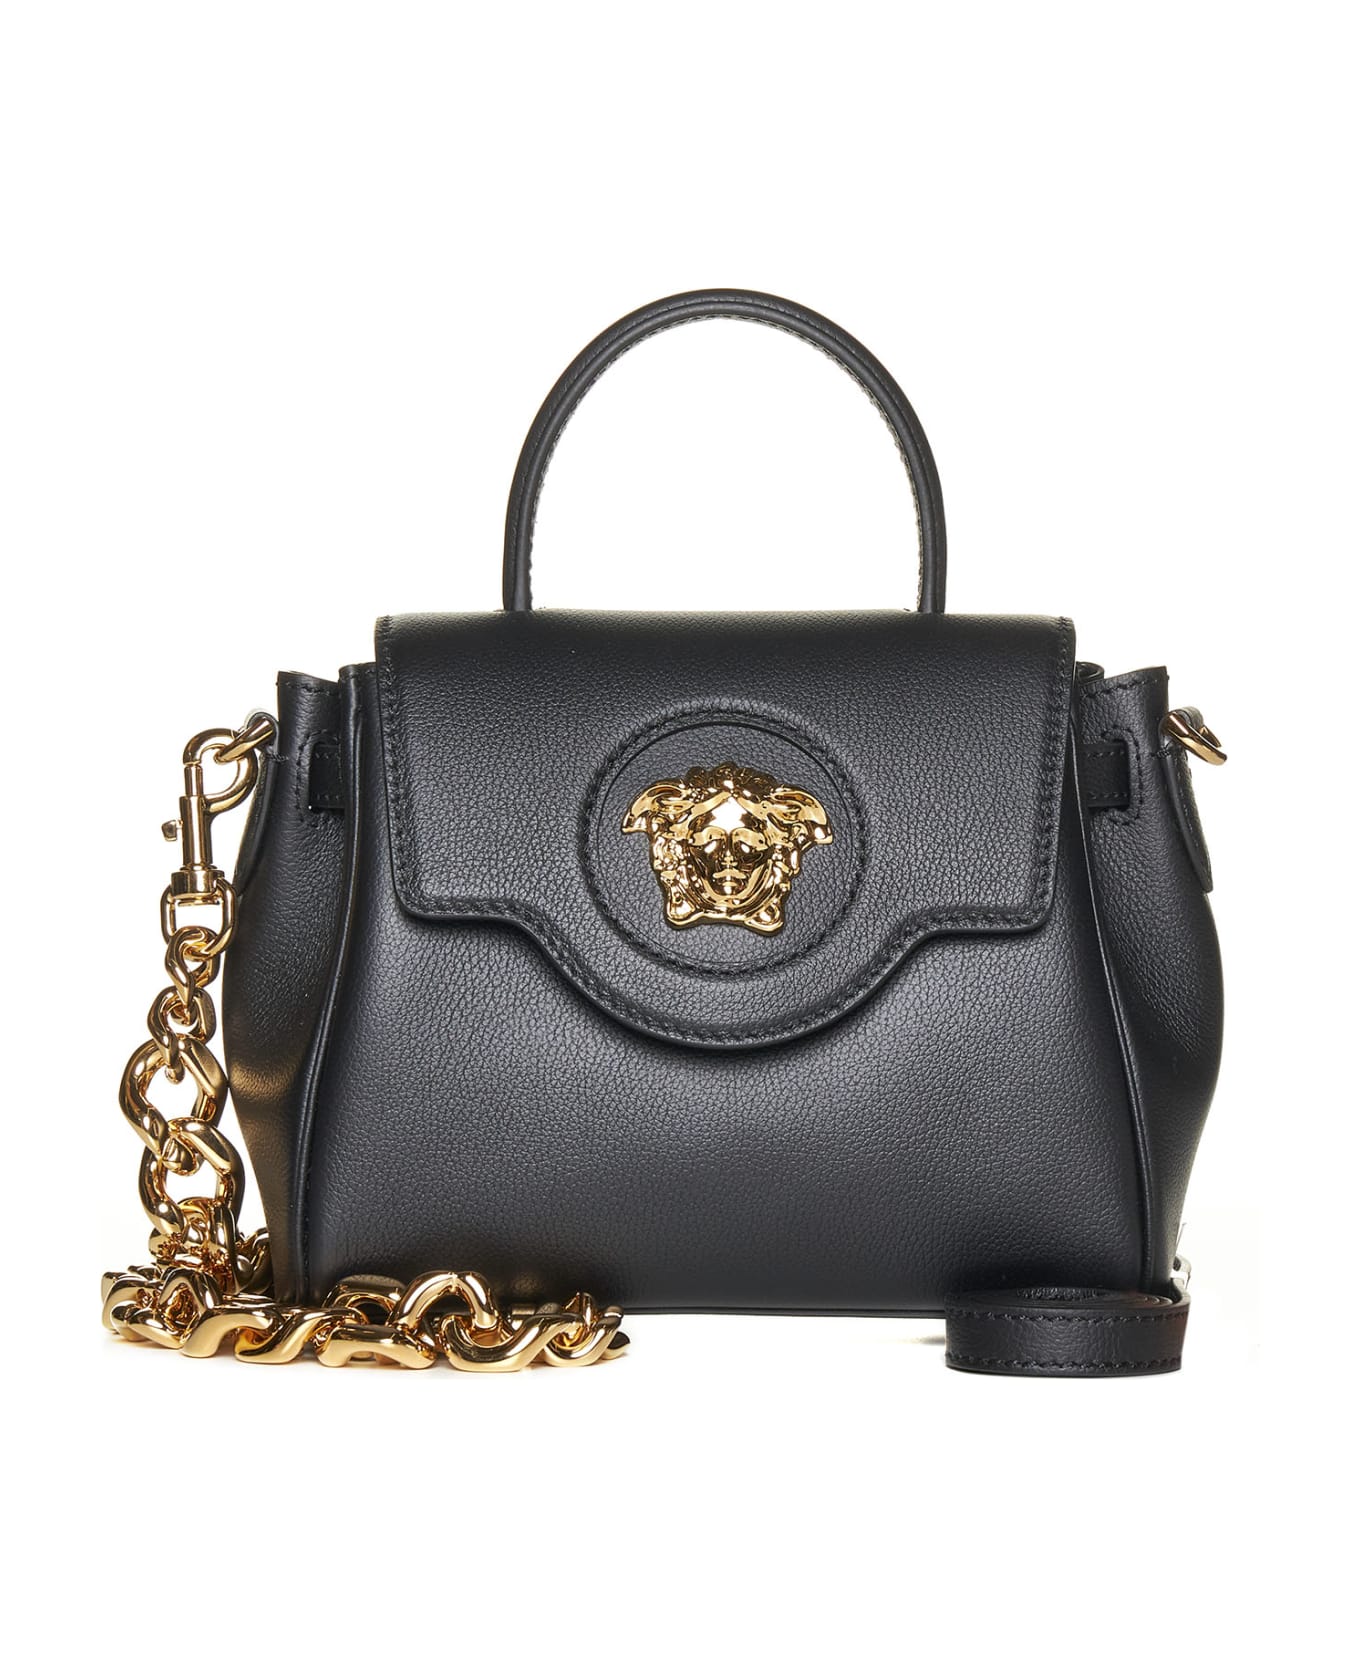 Versace La Medusa Small Leather Bag - Nero/oro Versace トートバッグ